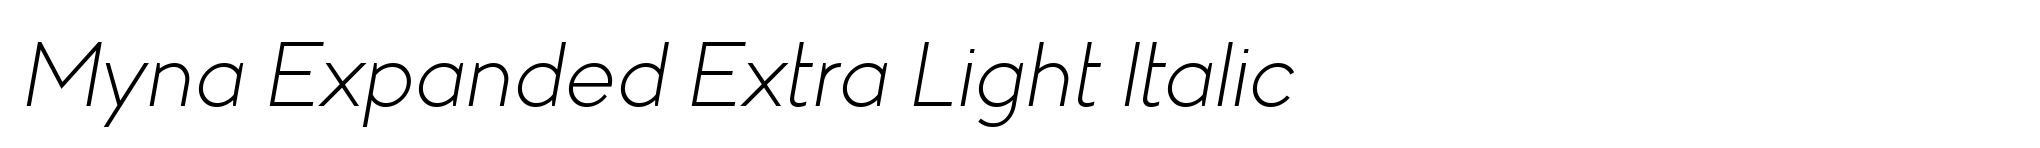 Myna Expanded Extra Light Italic image